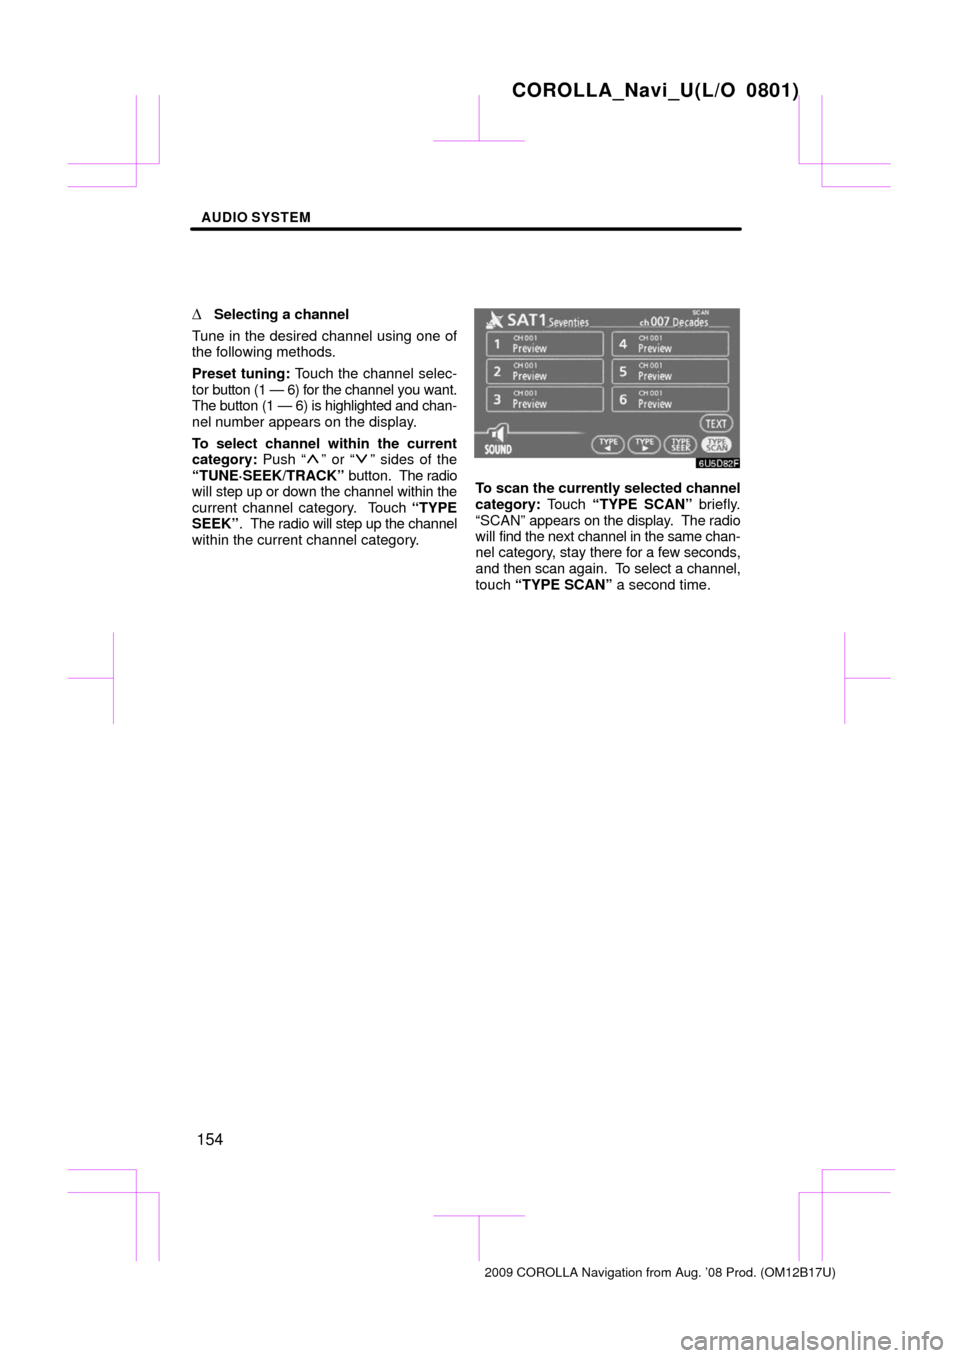 TOYOTA COROLLA 2009 10.G Navigation Manual AUDIO SYSTEM
154

Selecting a channel
Tune in the desired channel using one of
the following methods.
Preset tuning:  Touch the channel selec-
tor button (1 — 6) for the  channel you want.
The butt